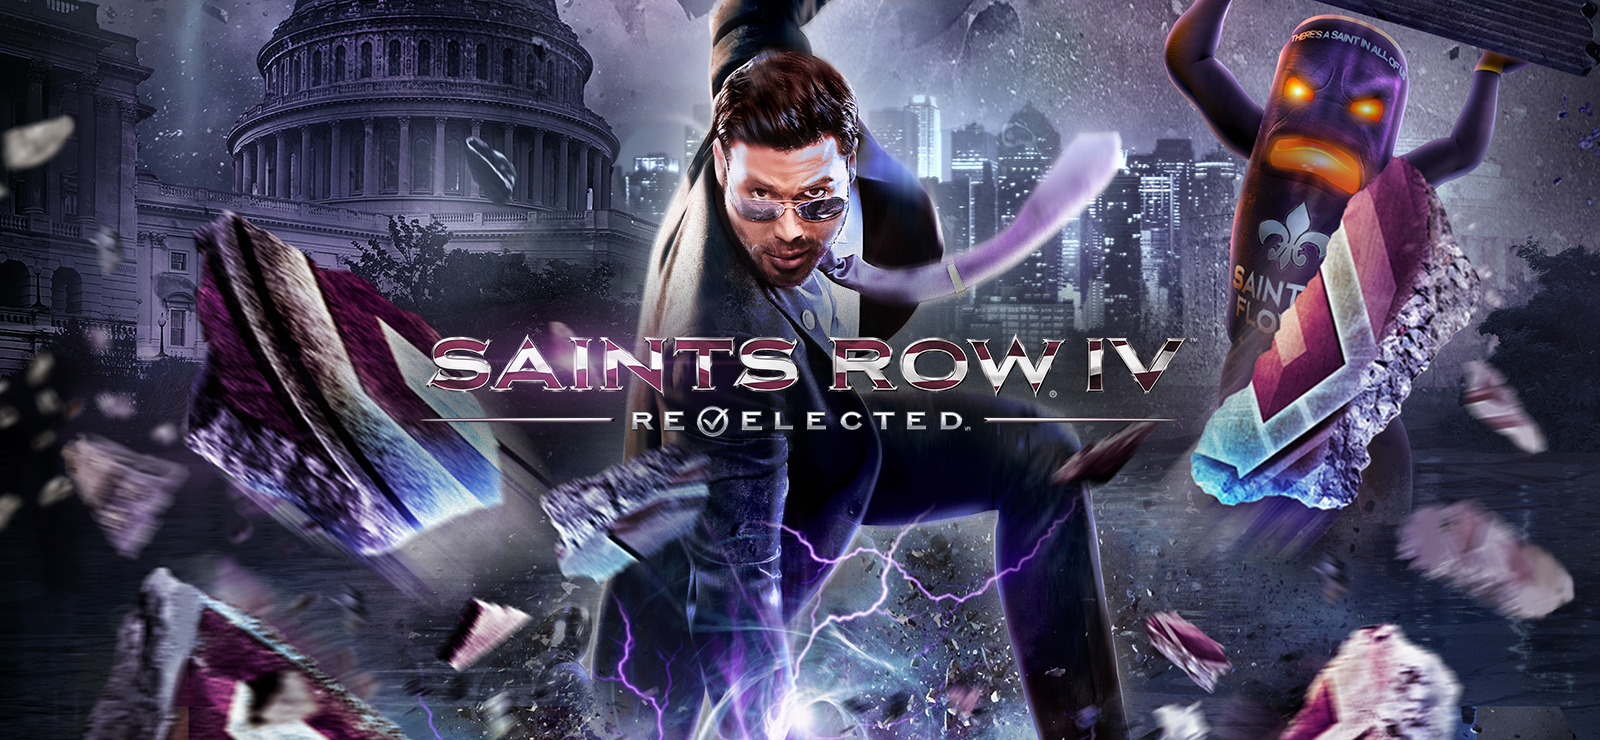 Saints Row 4 review: Outrageous fun